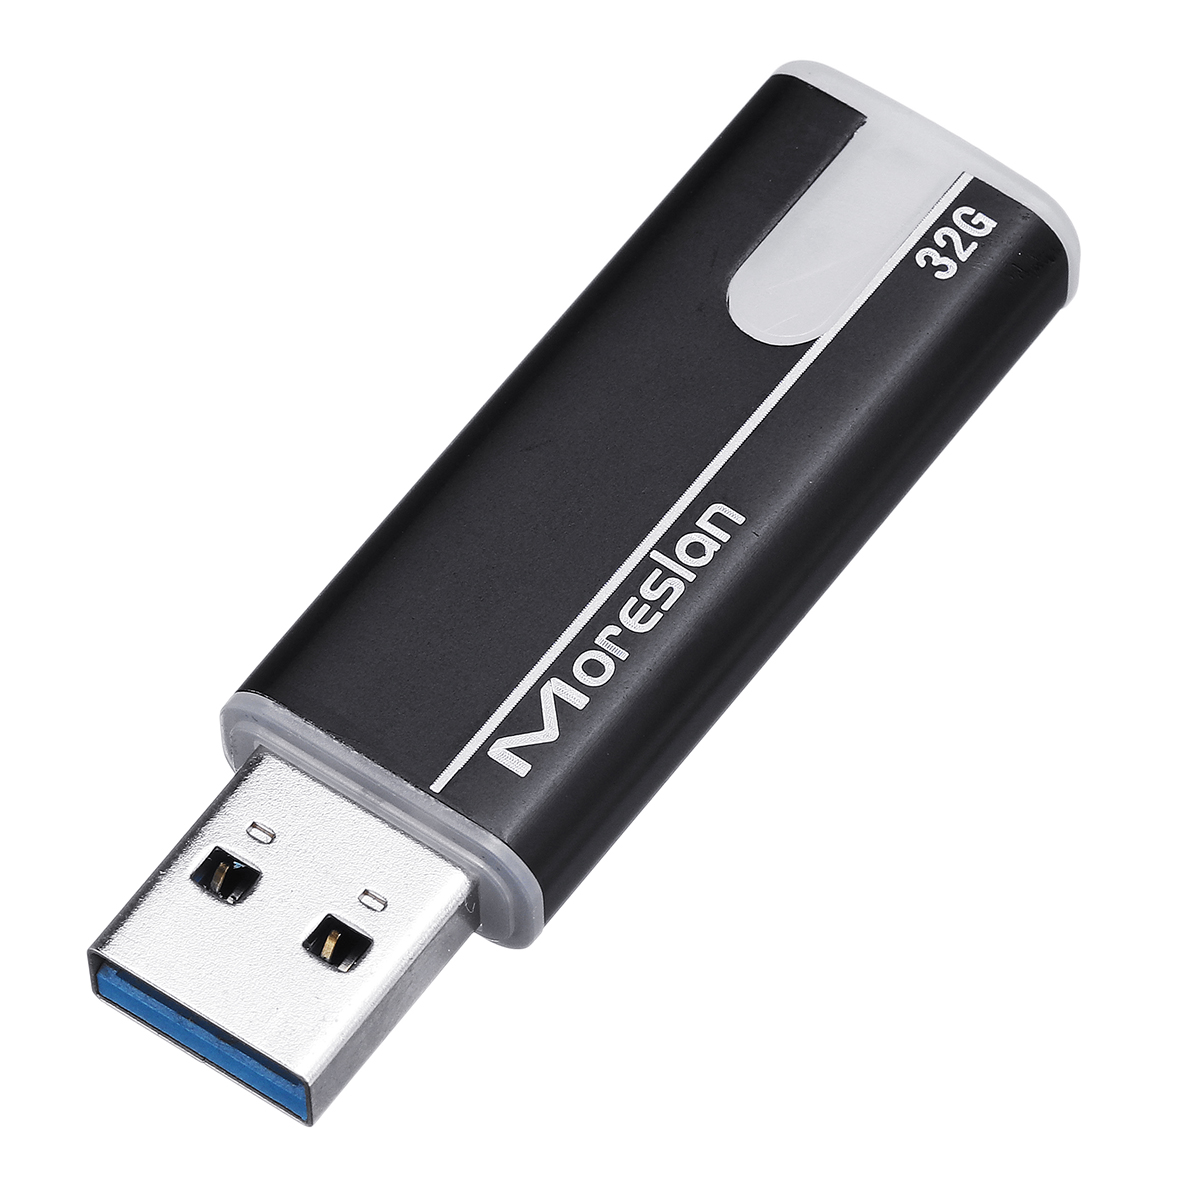 Black-USB30-Flash-Drive-64G-Portable-USB-Pen-Drive-Memory-Stick-USB-Disk-for-Desktop-PC-Laptop-1973244-4